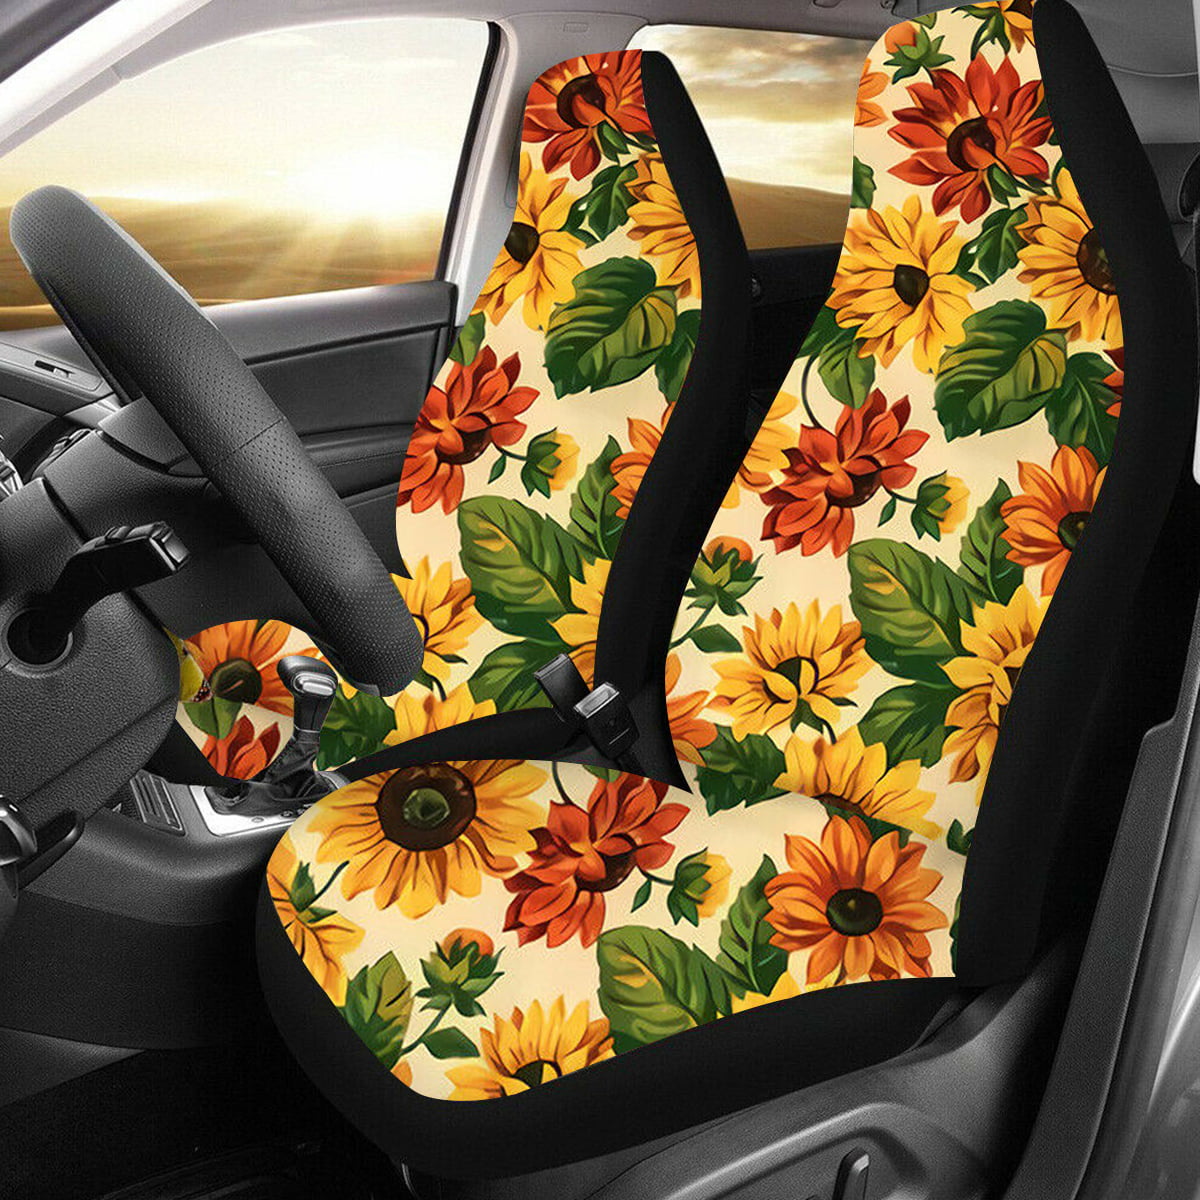 Leopard Seat Belt Pads Protectors Sunflower Car Accessories Sunflower Seatbelt Cover